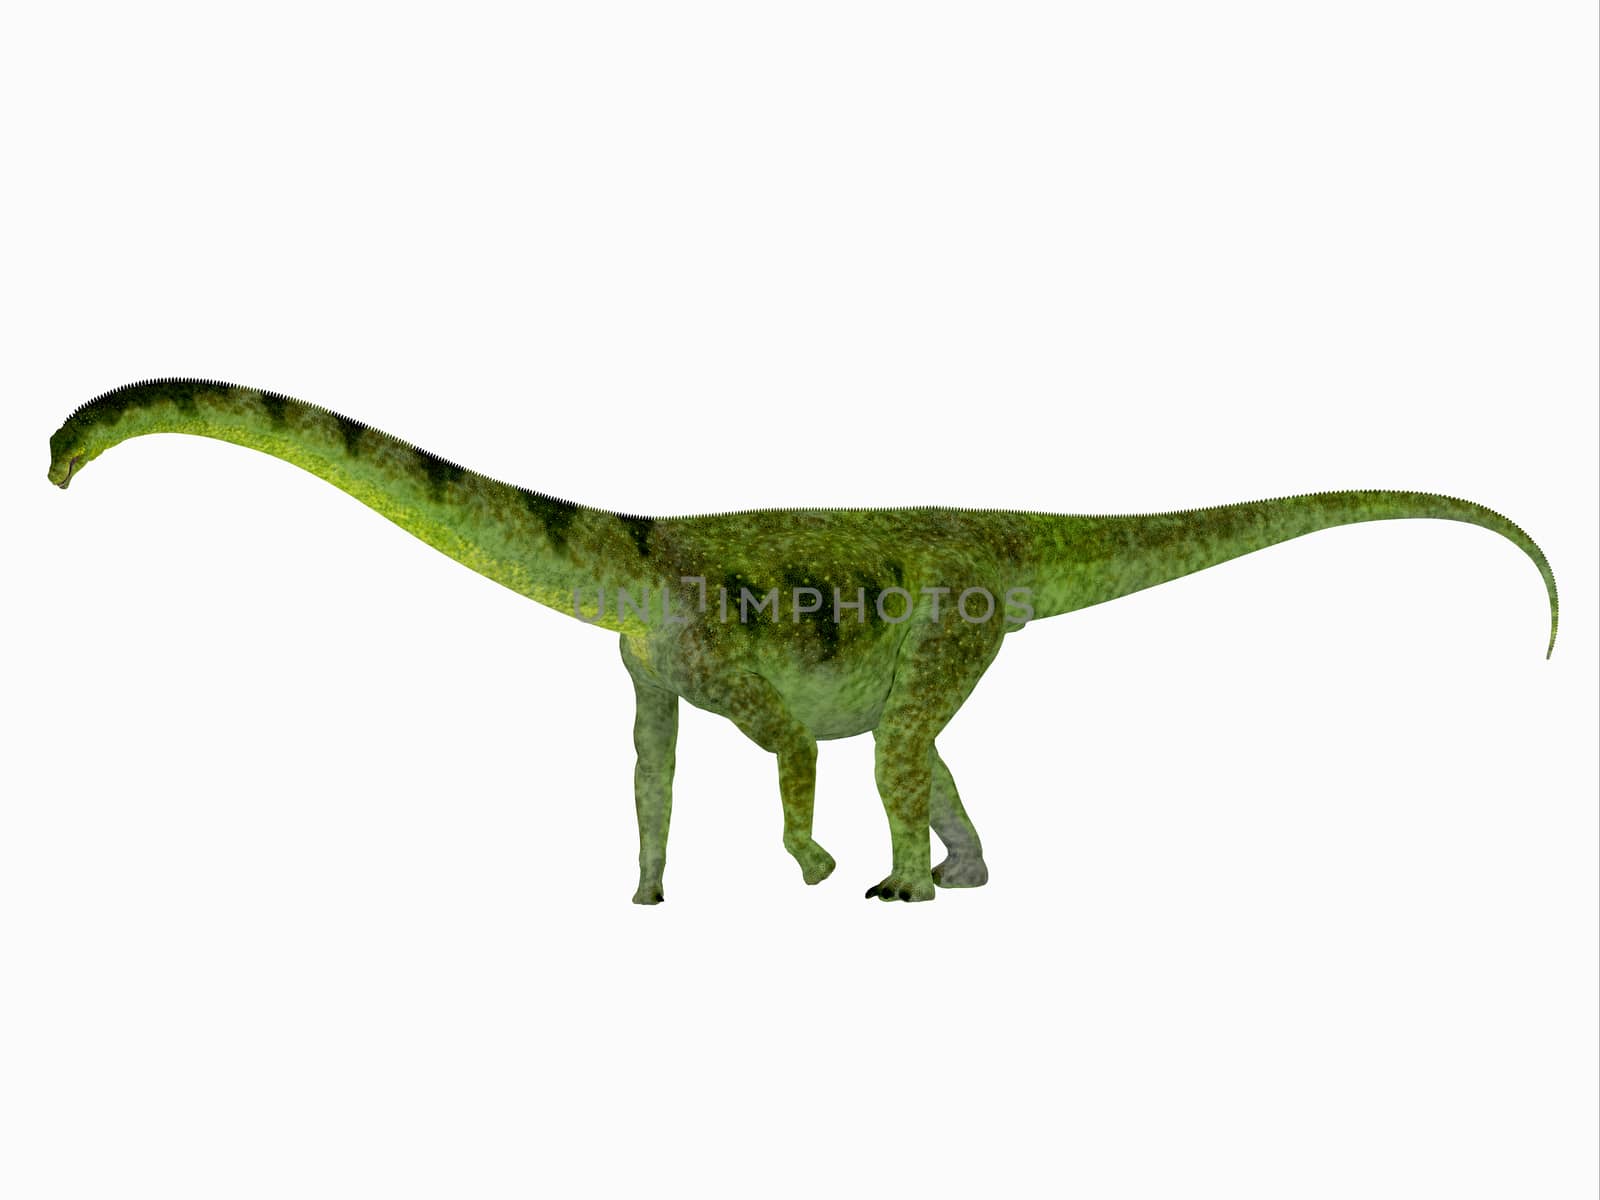 Puertasaurus Dinosaur Side View by Catmando